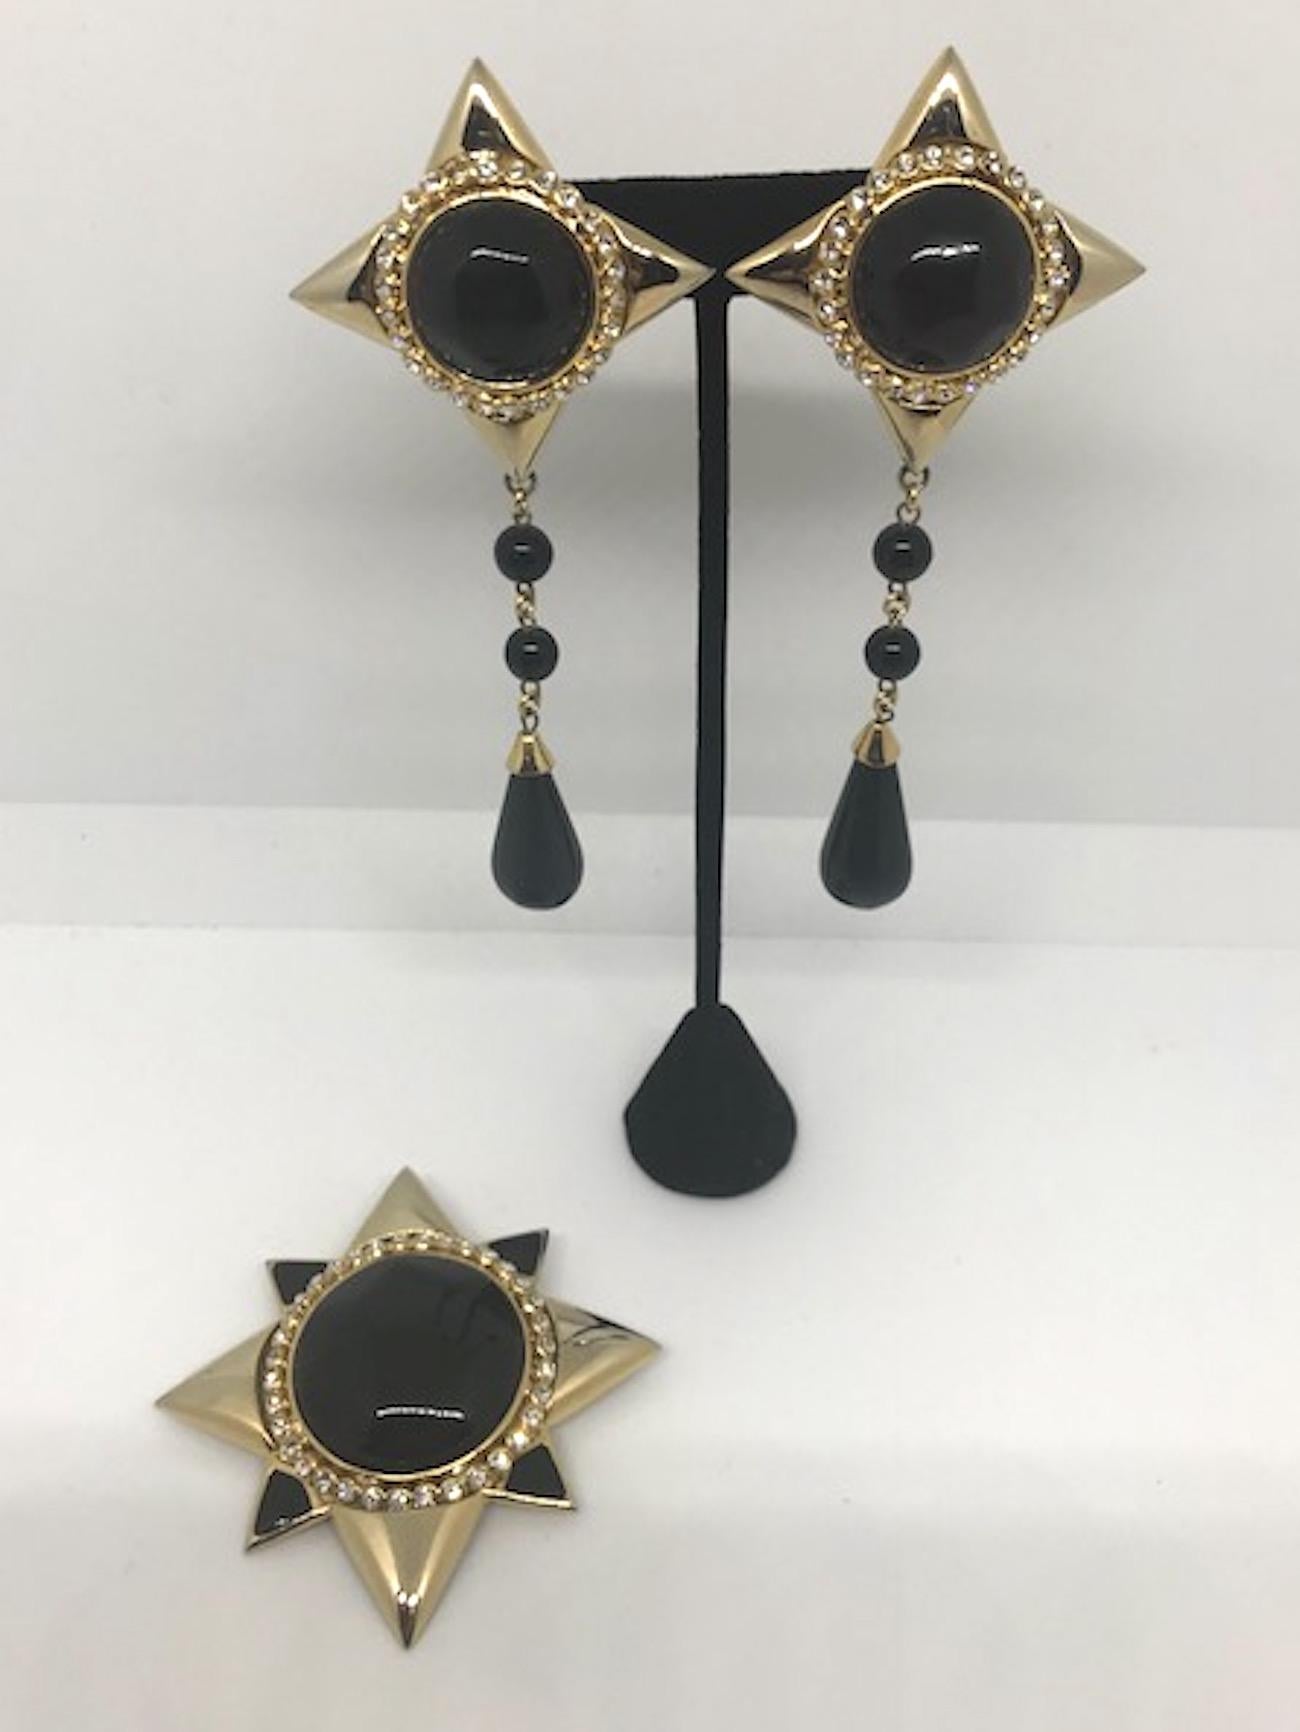 De Liguoro 1980s pendant earrings from Elsa Martinelli's collection 3